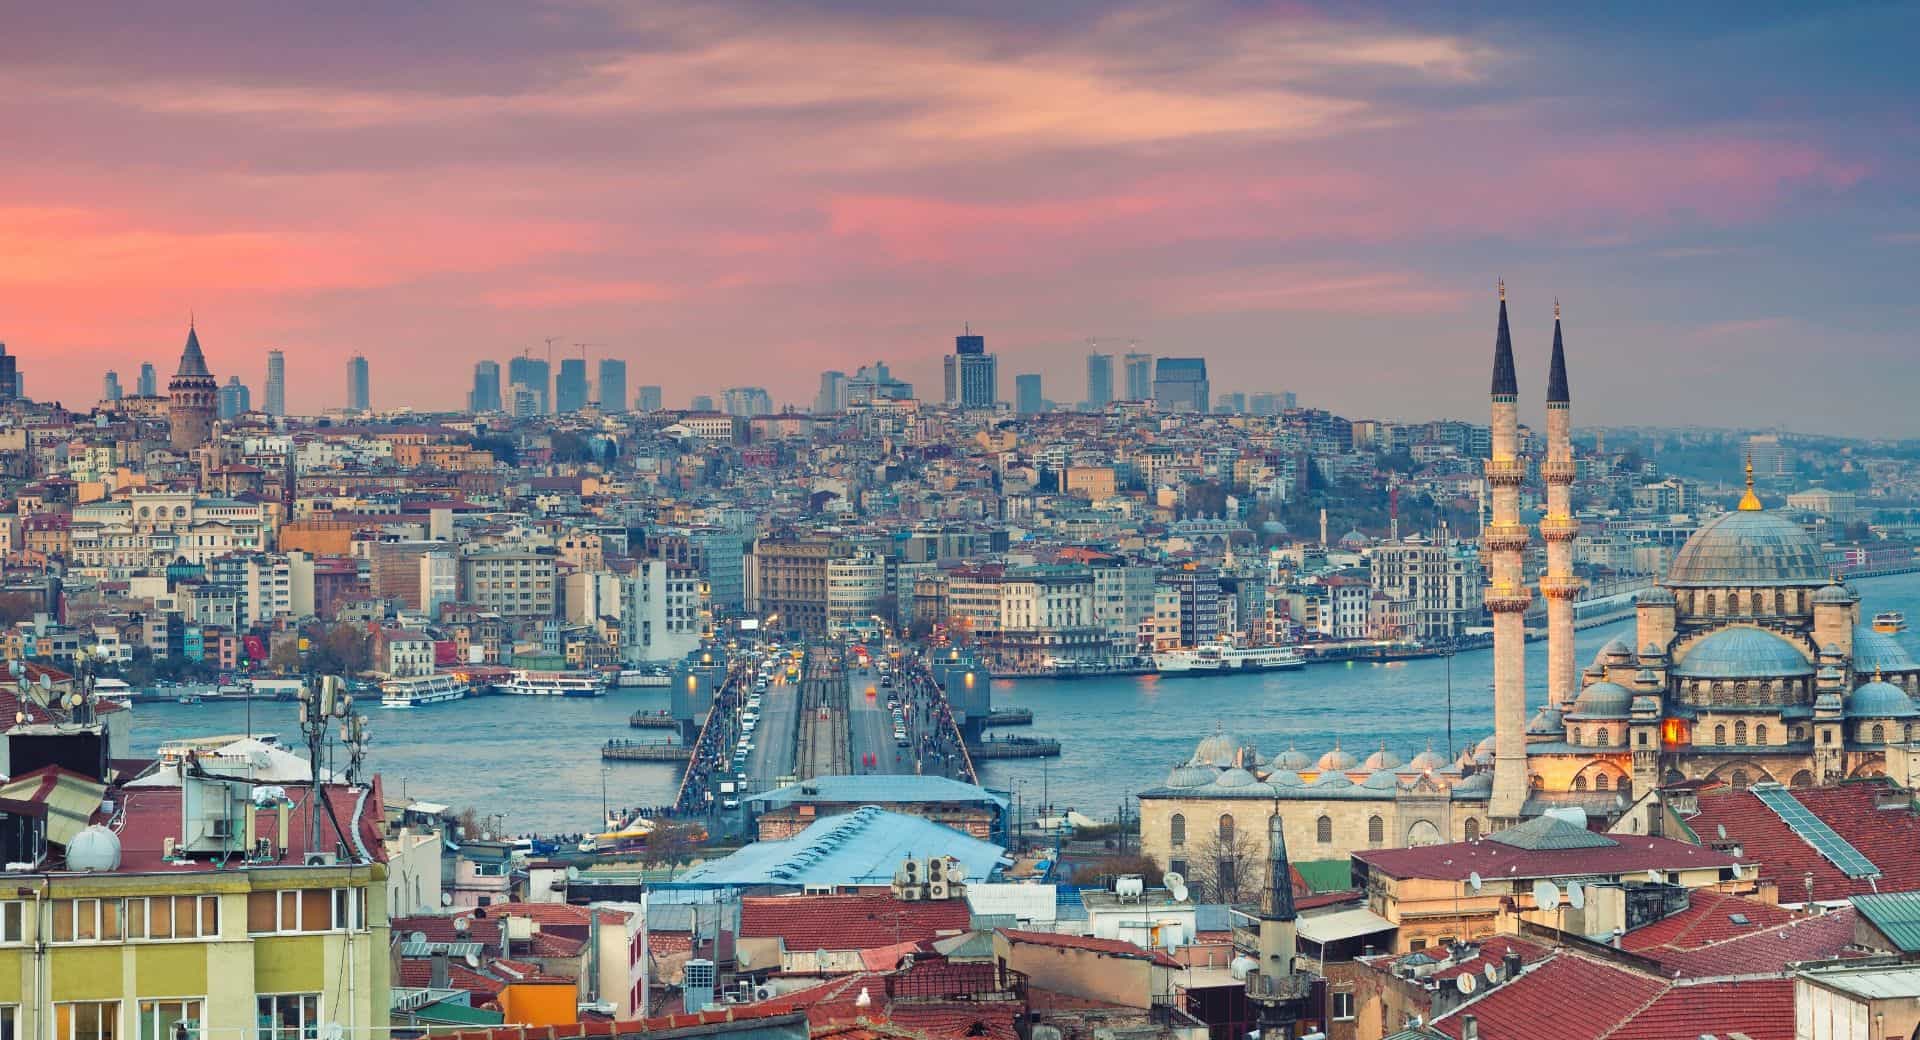 istanbul travel risk